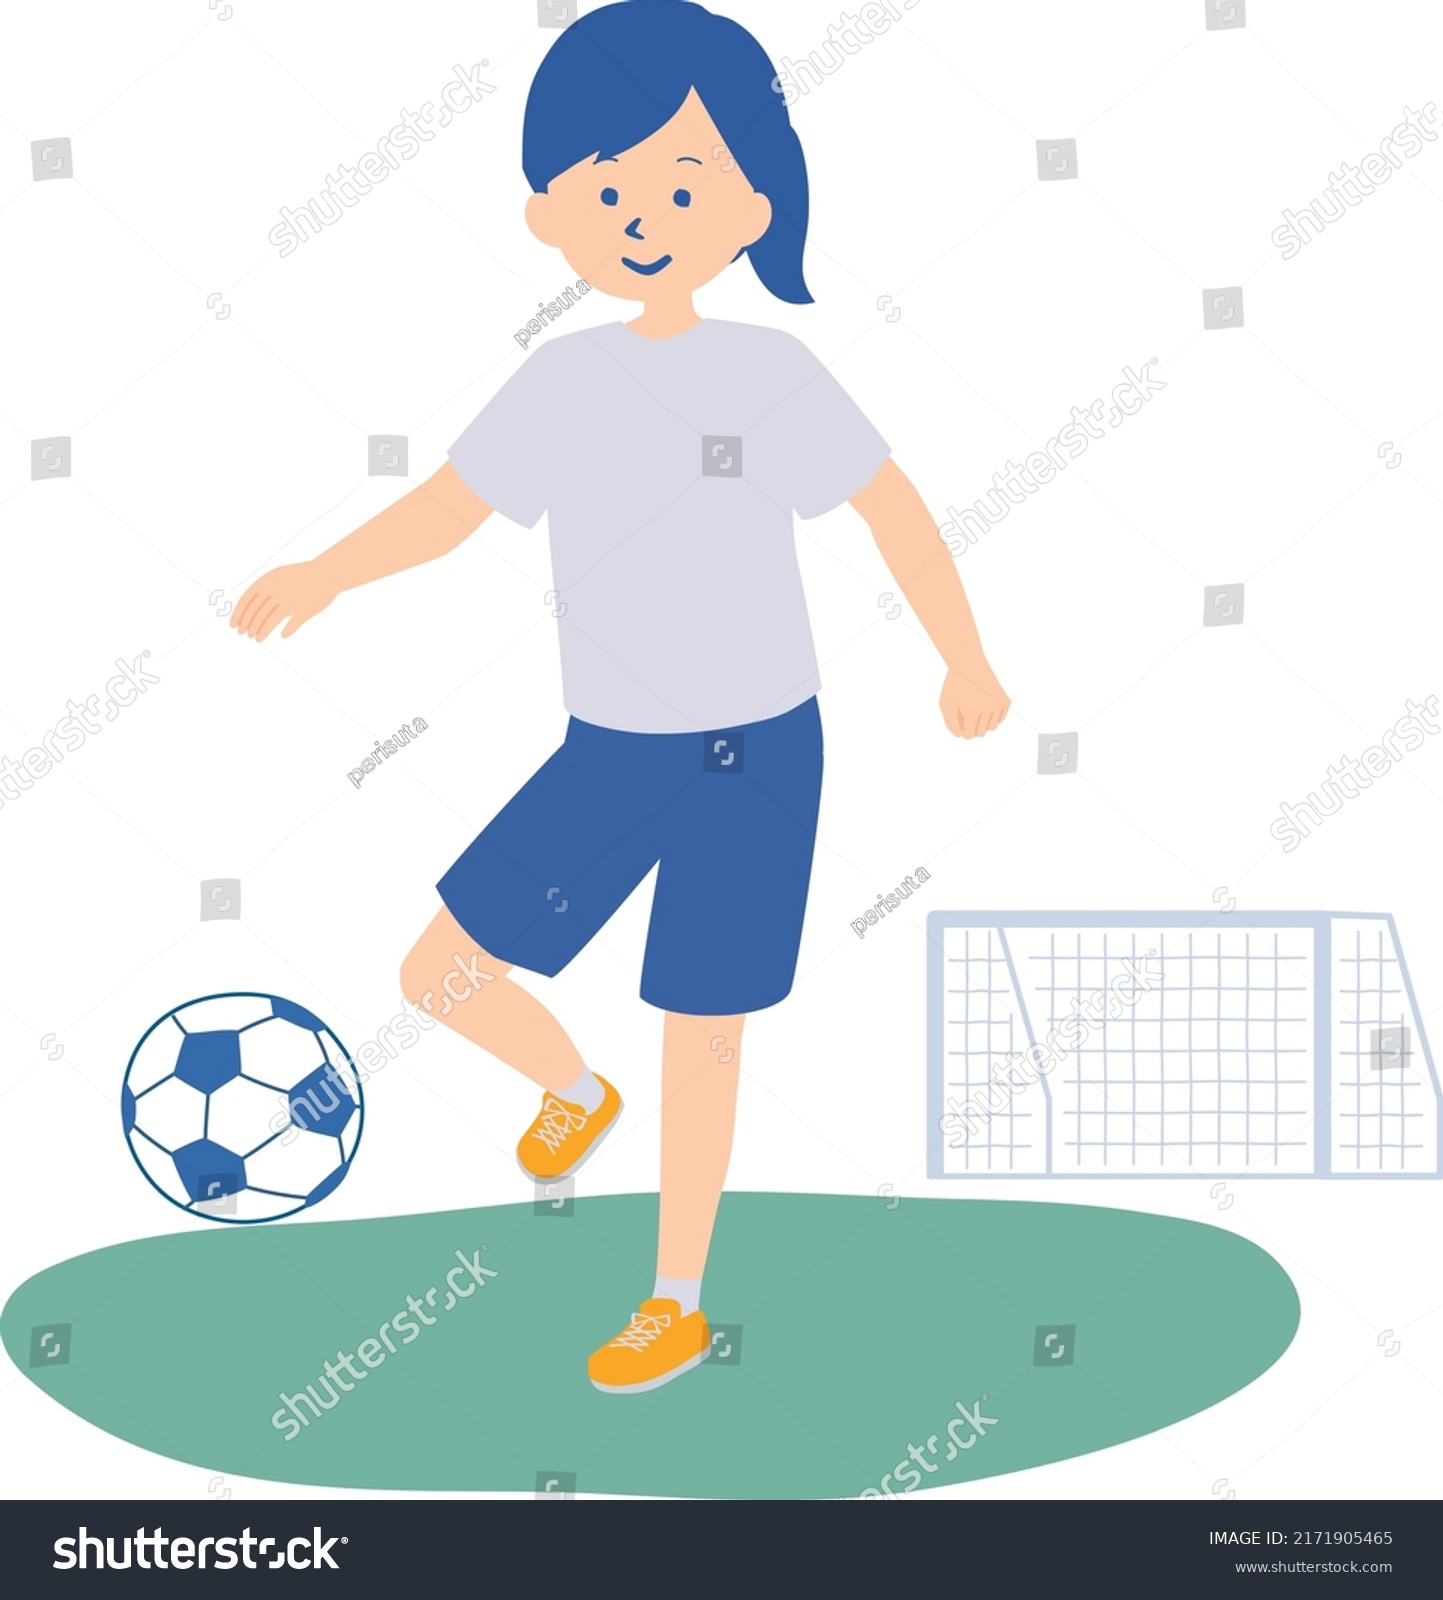 Stock Vector Illustration Of A Girl Playing Soccer Soccer Team 2171905465 